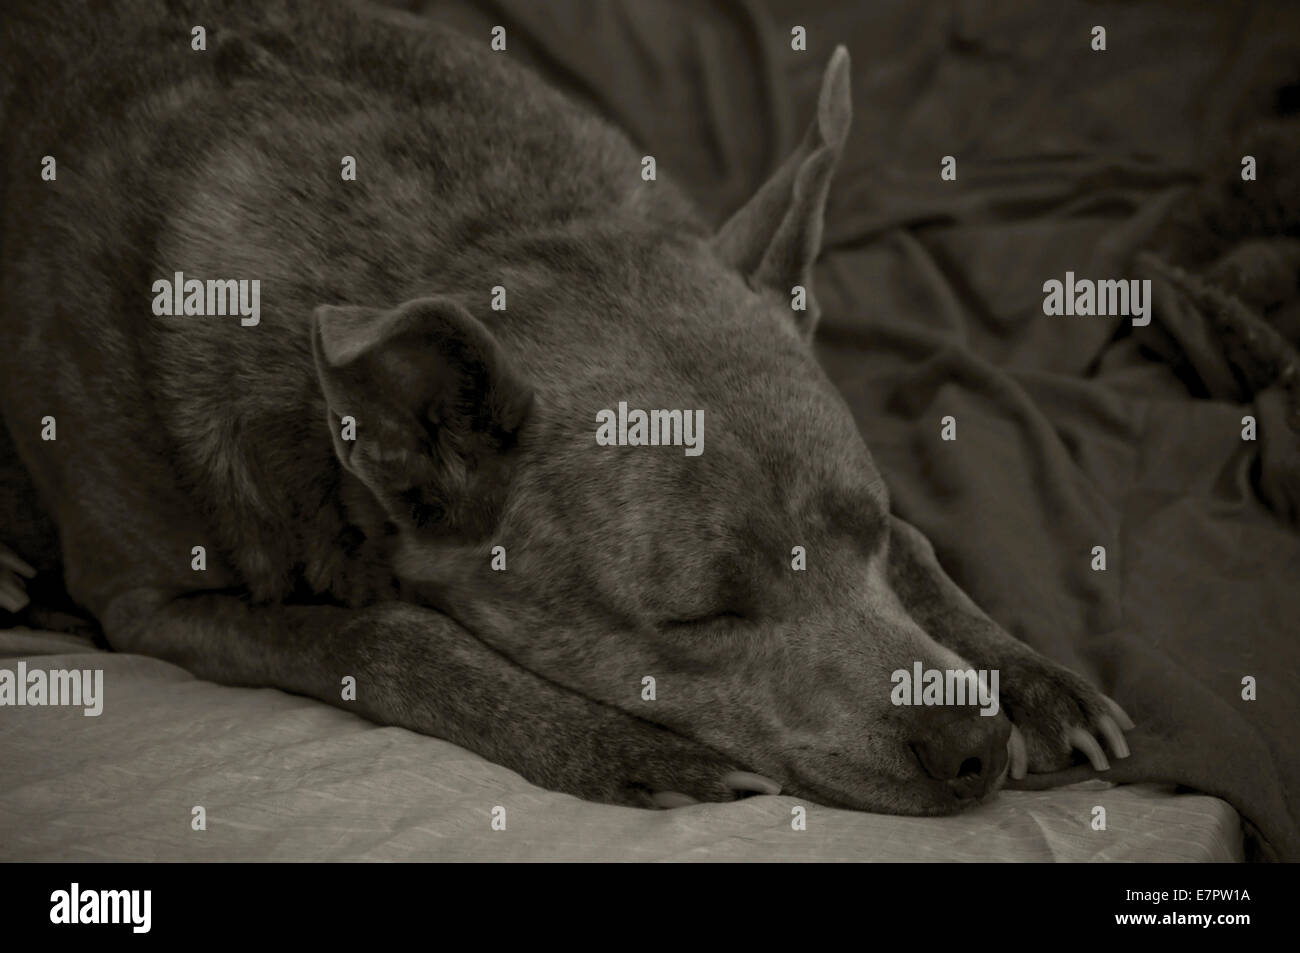 Black and white photograph of a sleeping pitt-bull shepherd mix breed dog. Stock Photo